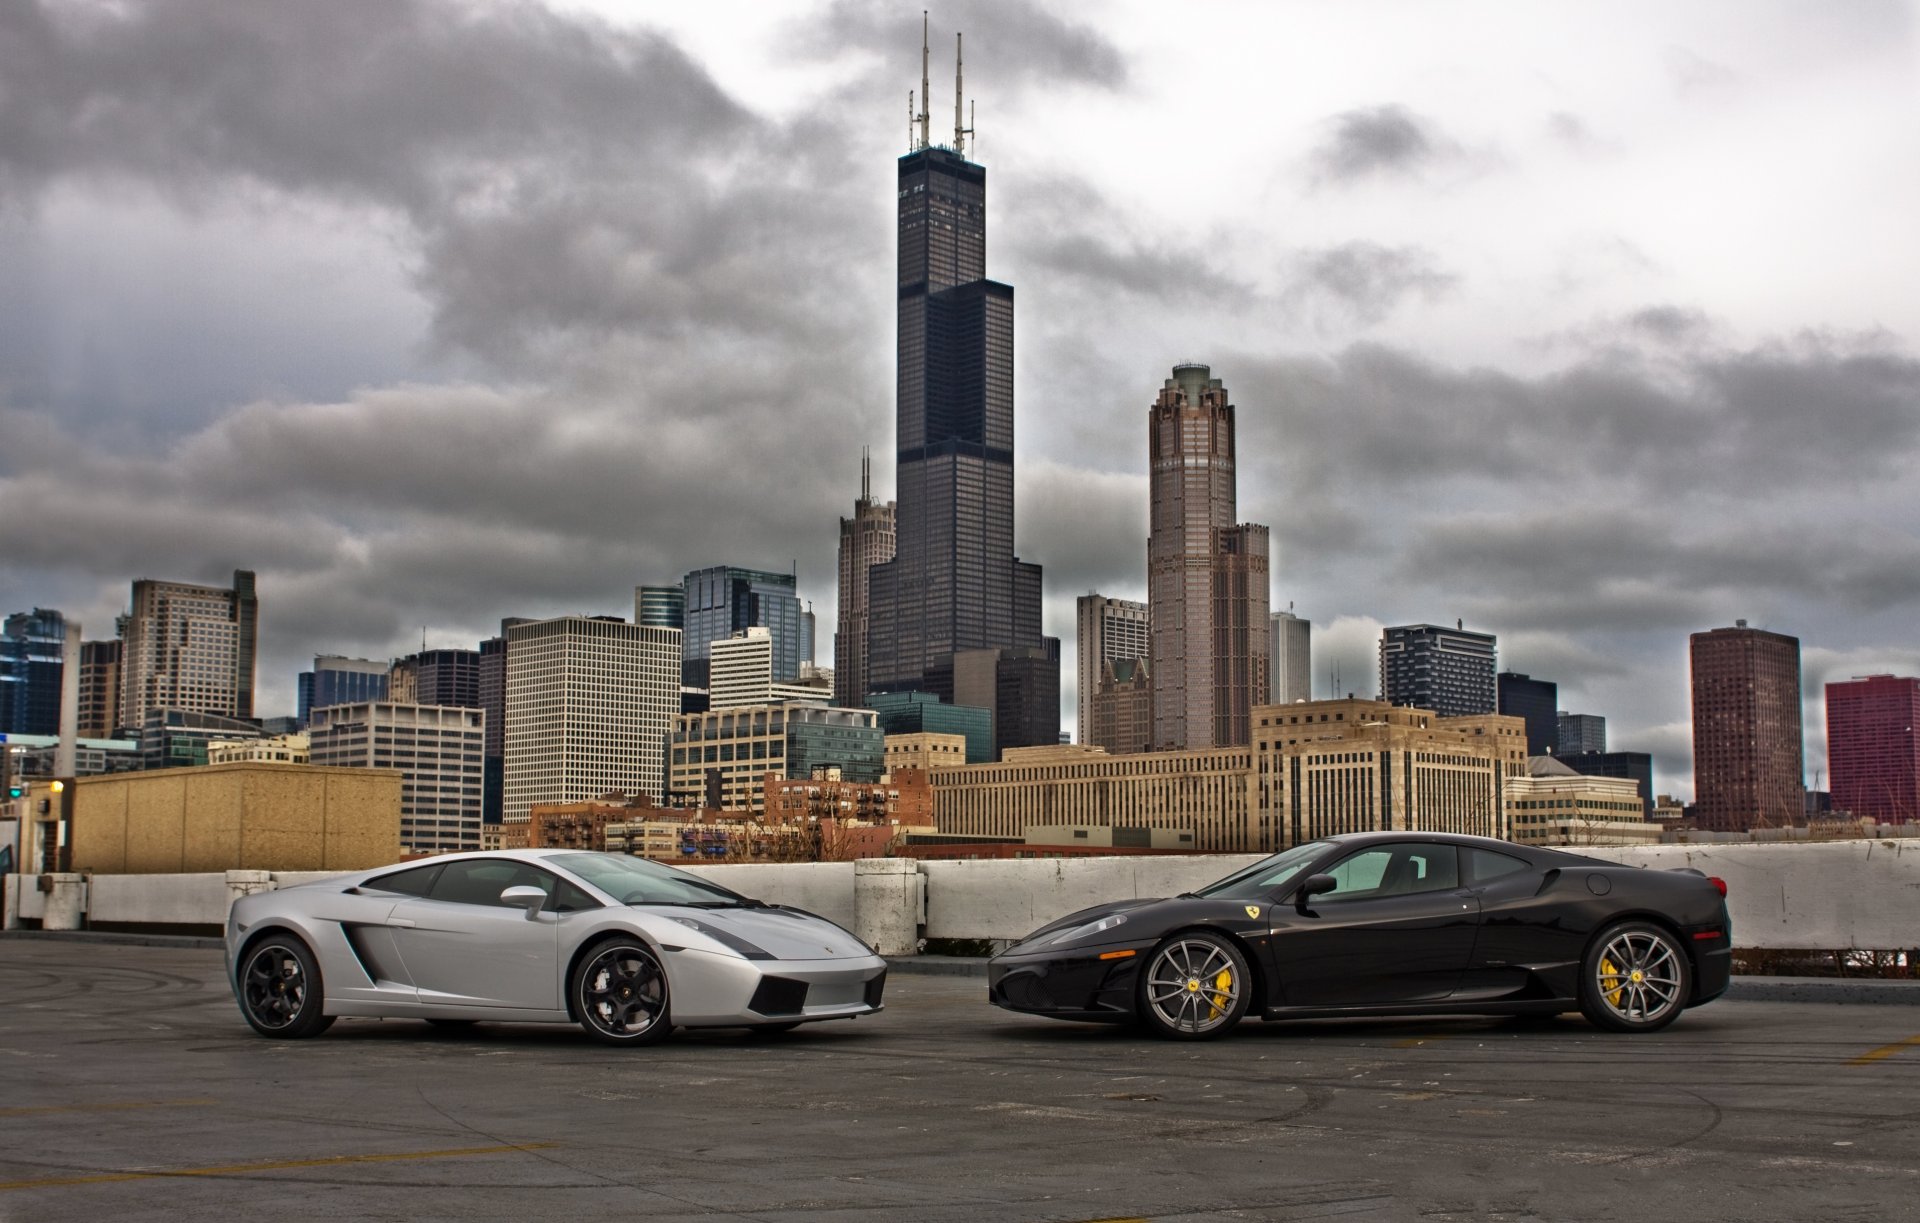 Ban cars from city. Ламборгини в Нью Йорке. Lamborghini Ferrari Black. Автомобиль и небоскрёбы. Автомобиль на фоне небоскребов.